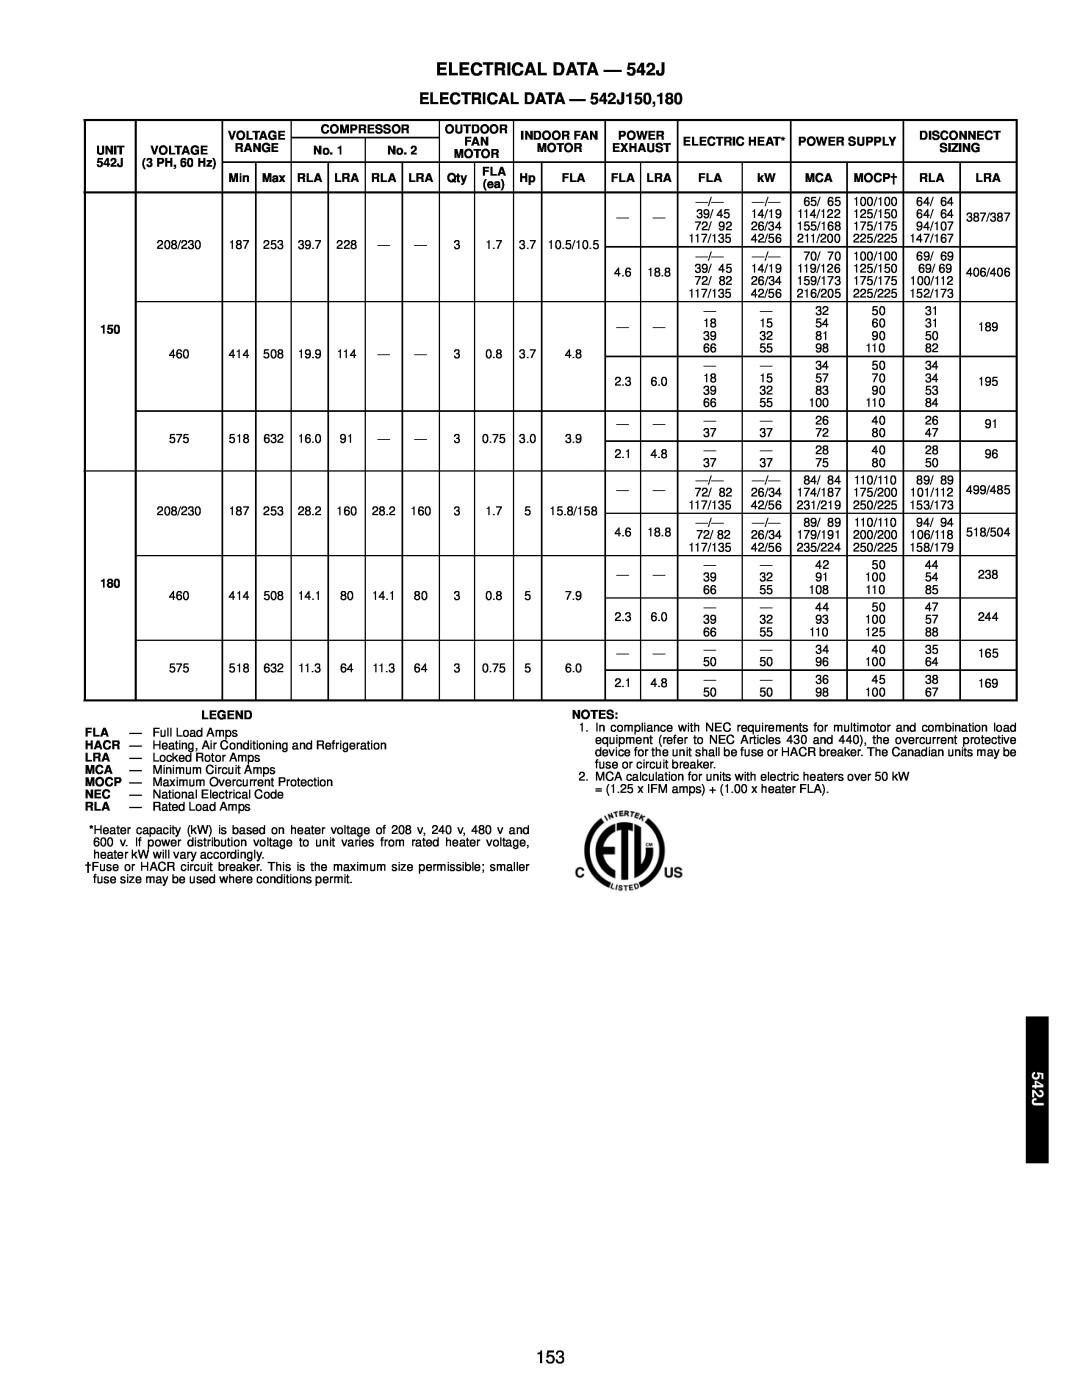 Bryant 549C manual ELECTRICAL DATA — 542J, ELECTRICAL DATA - 542J150,180 